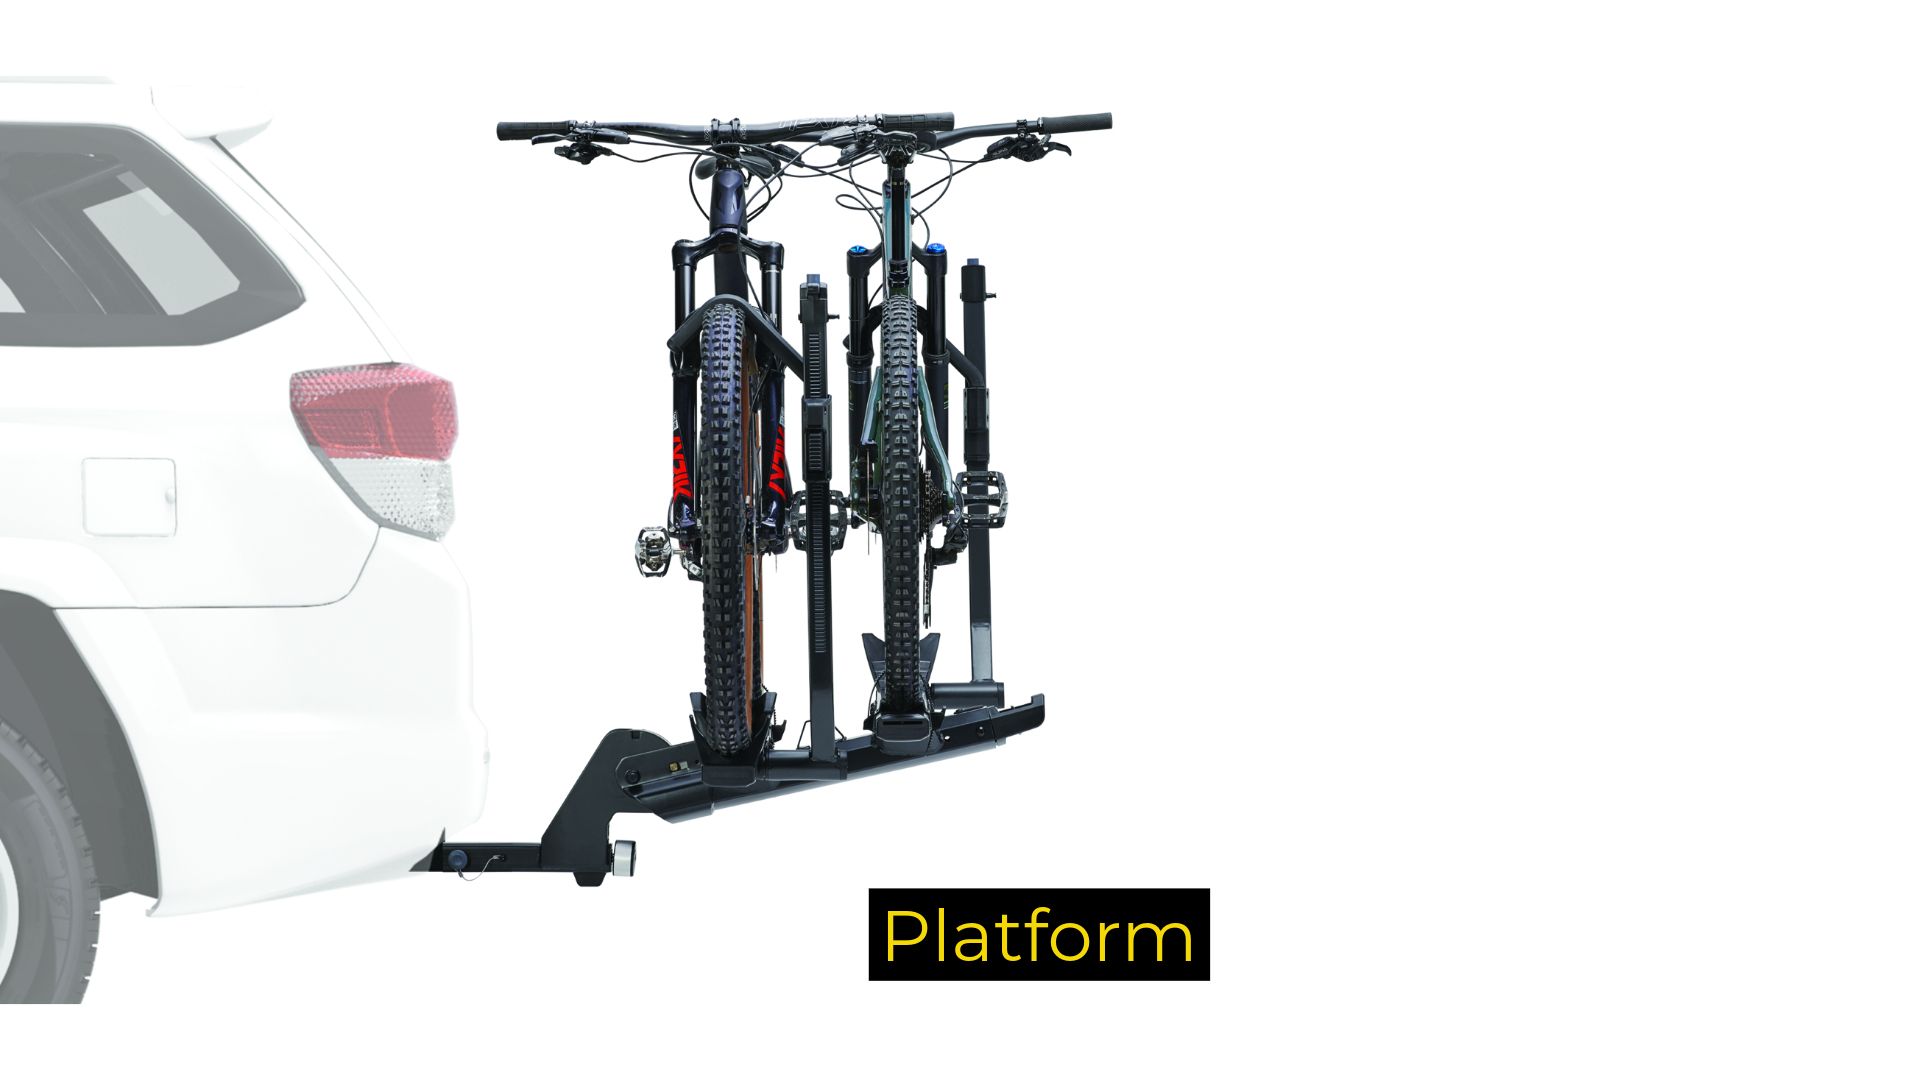 A platform style hitch bike rack